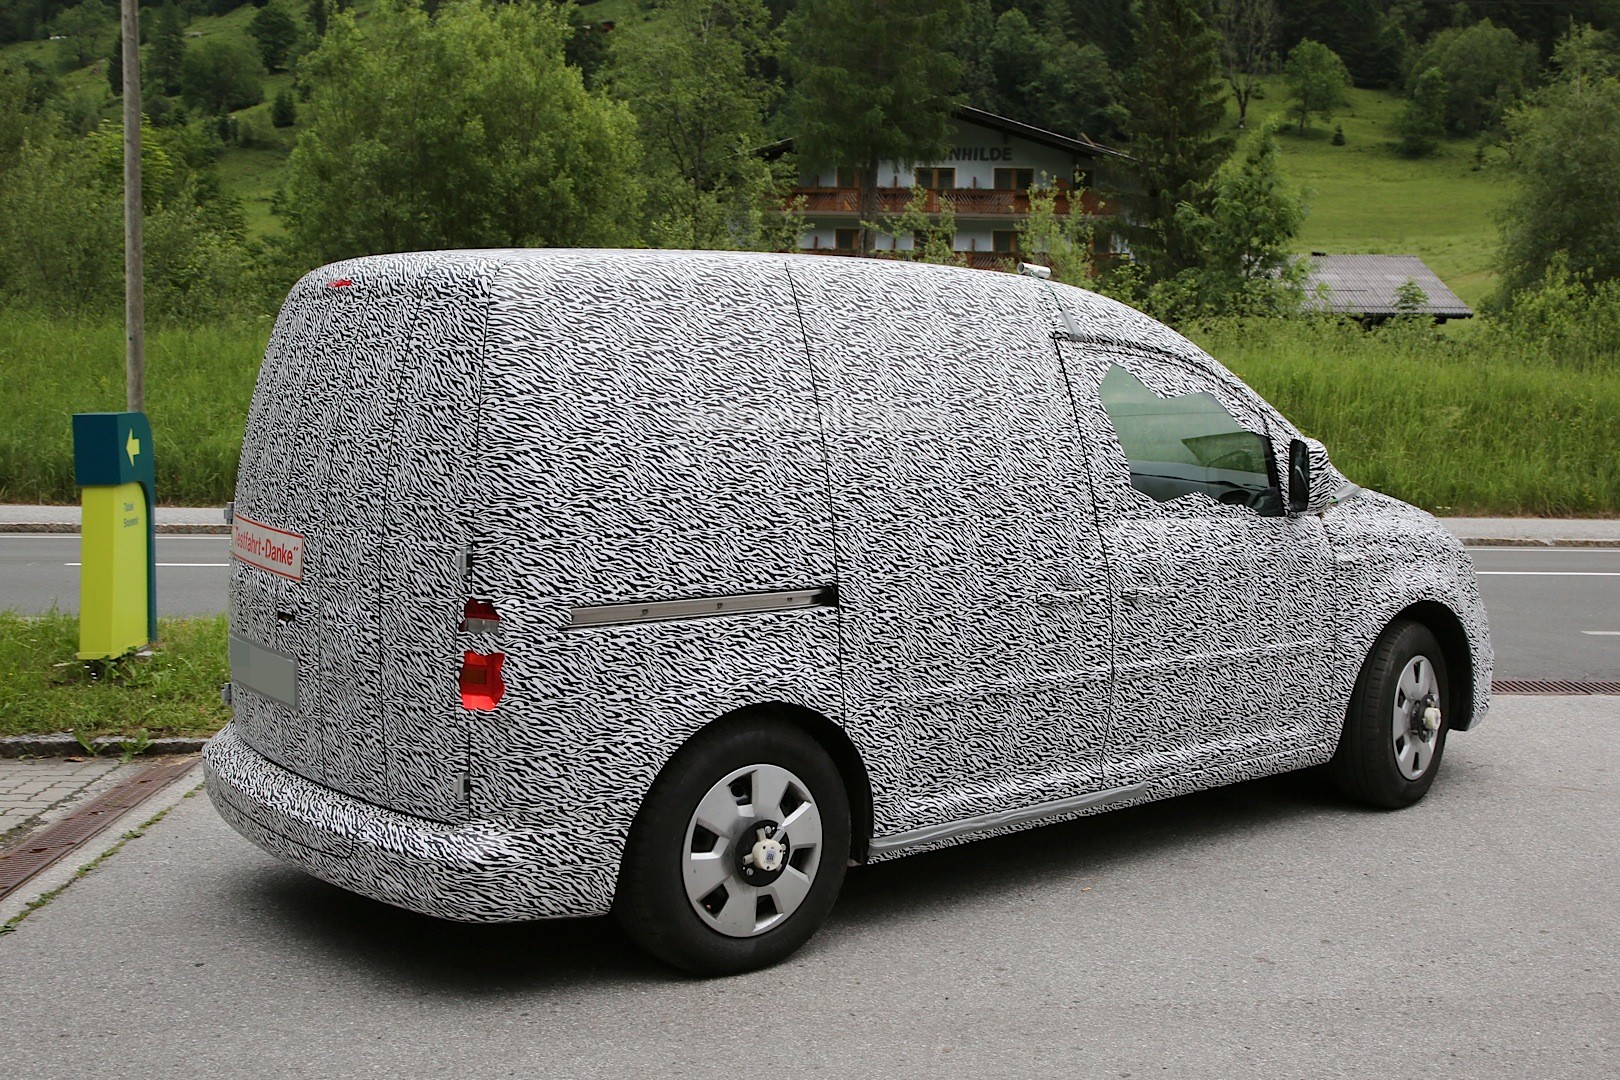 2016 Skoda Roomster rendered based on VW Caddy